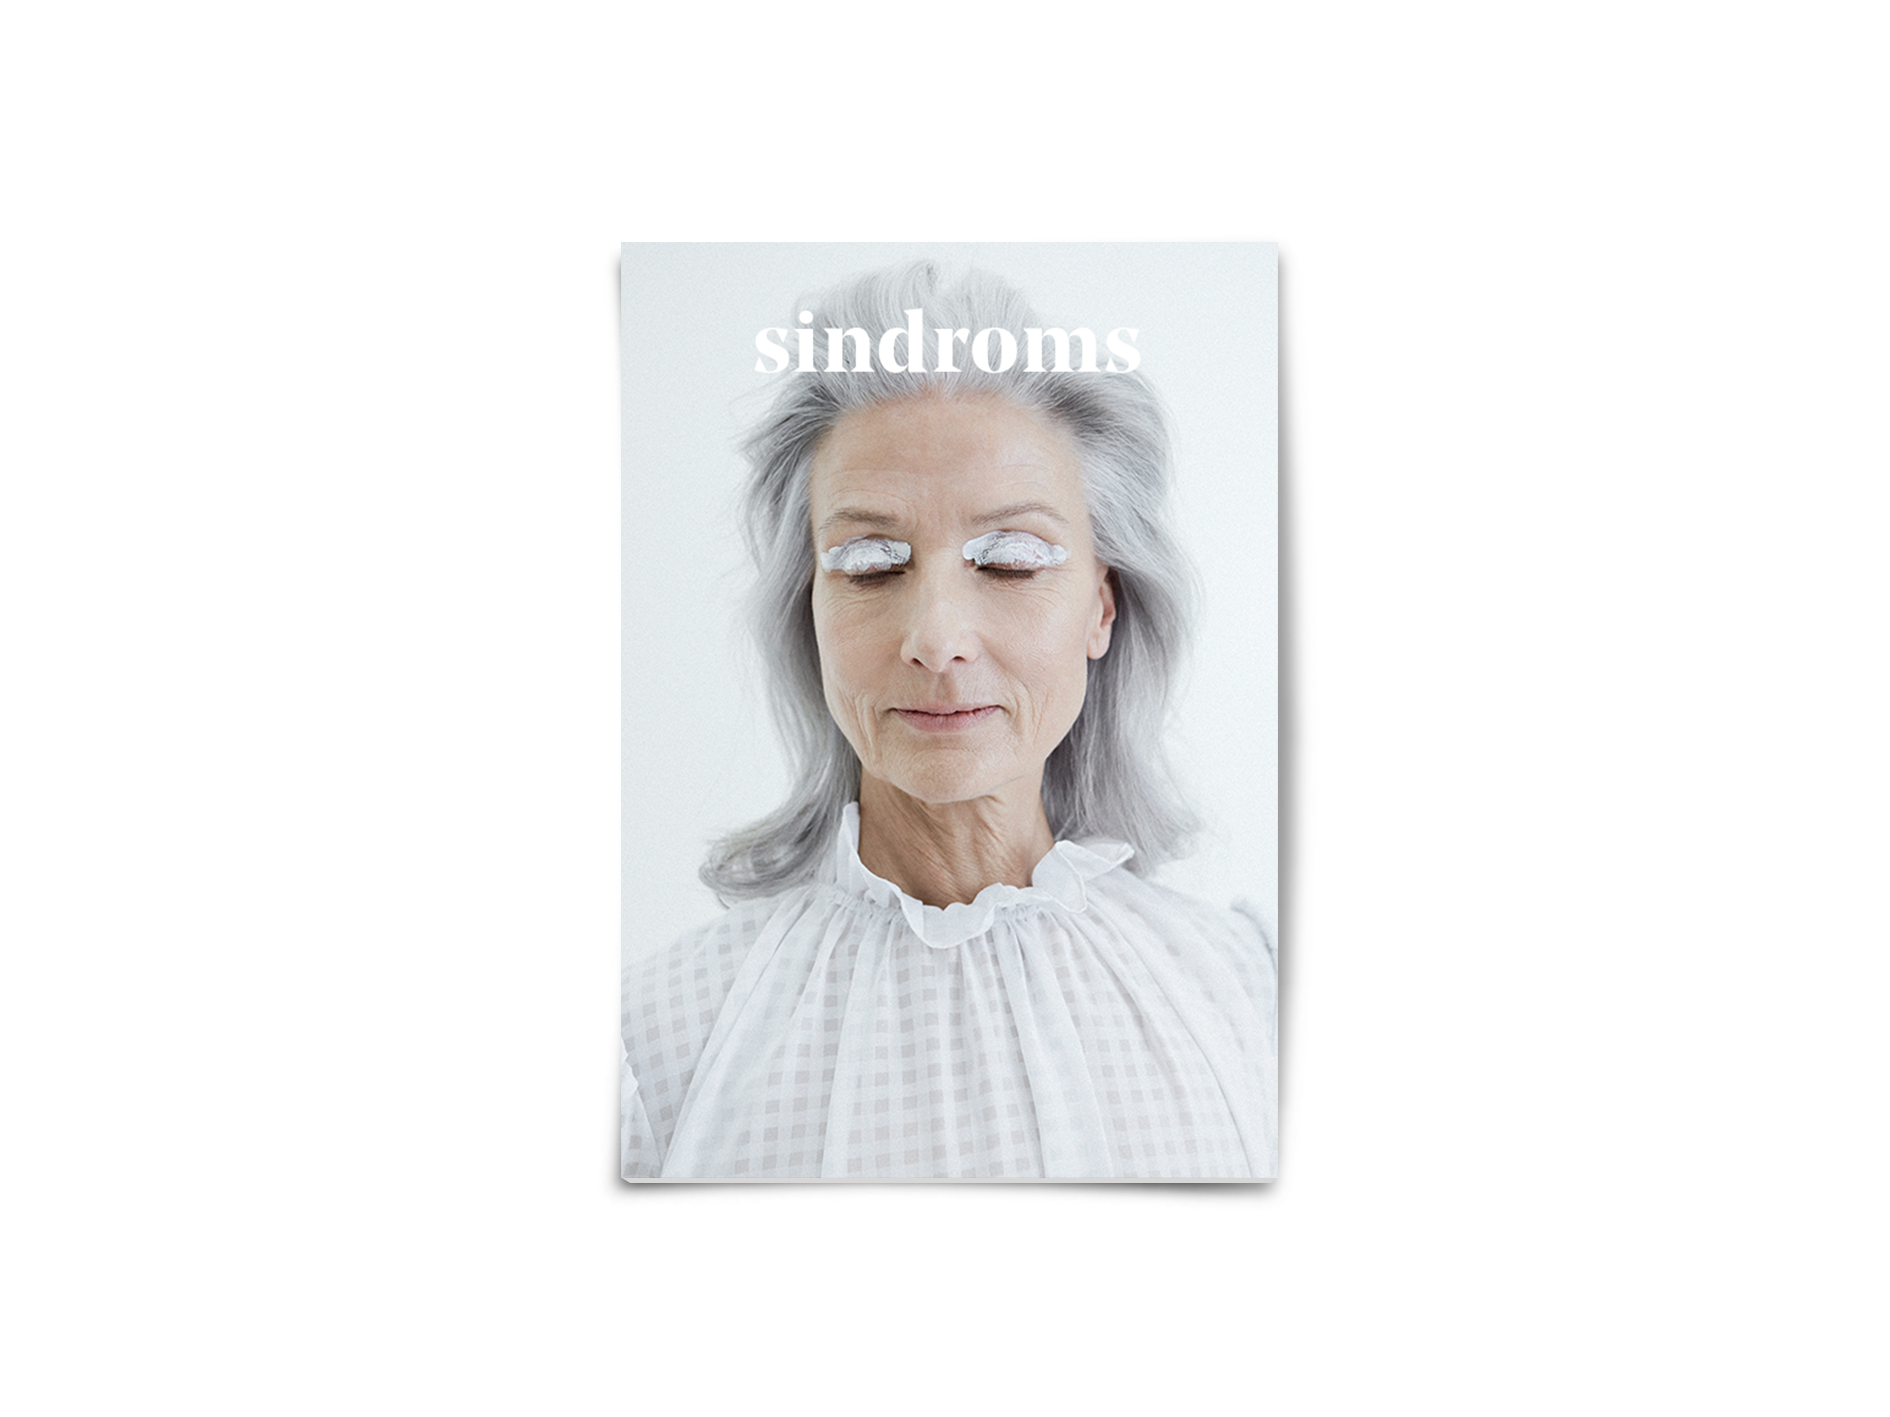 sindroms / Issue #3: White Sindrom